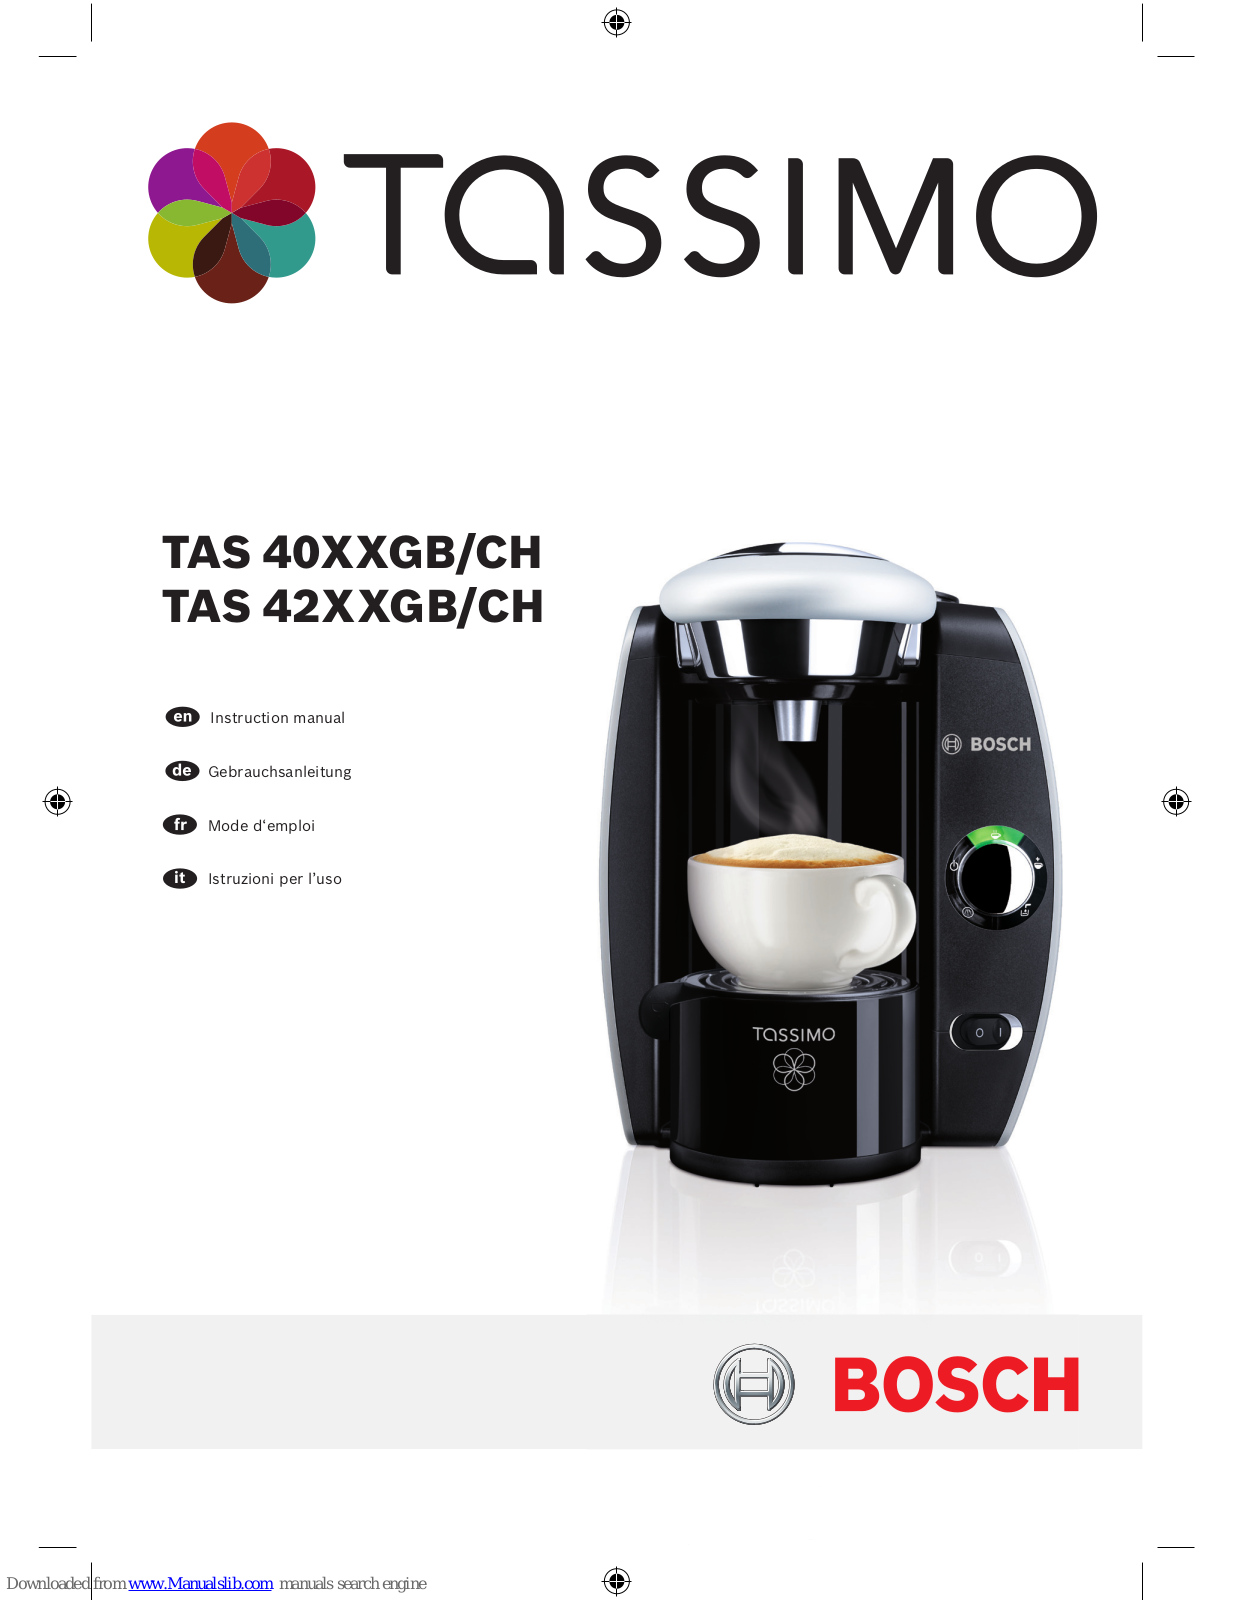 Bosch TASSIMO TAS 42XXGB/CH, TASSIMO TAS 40XXGB/CH Instruction Manual